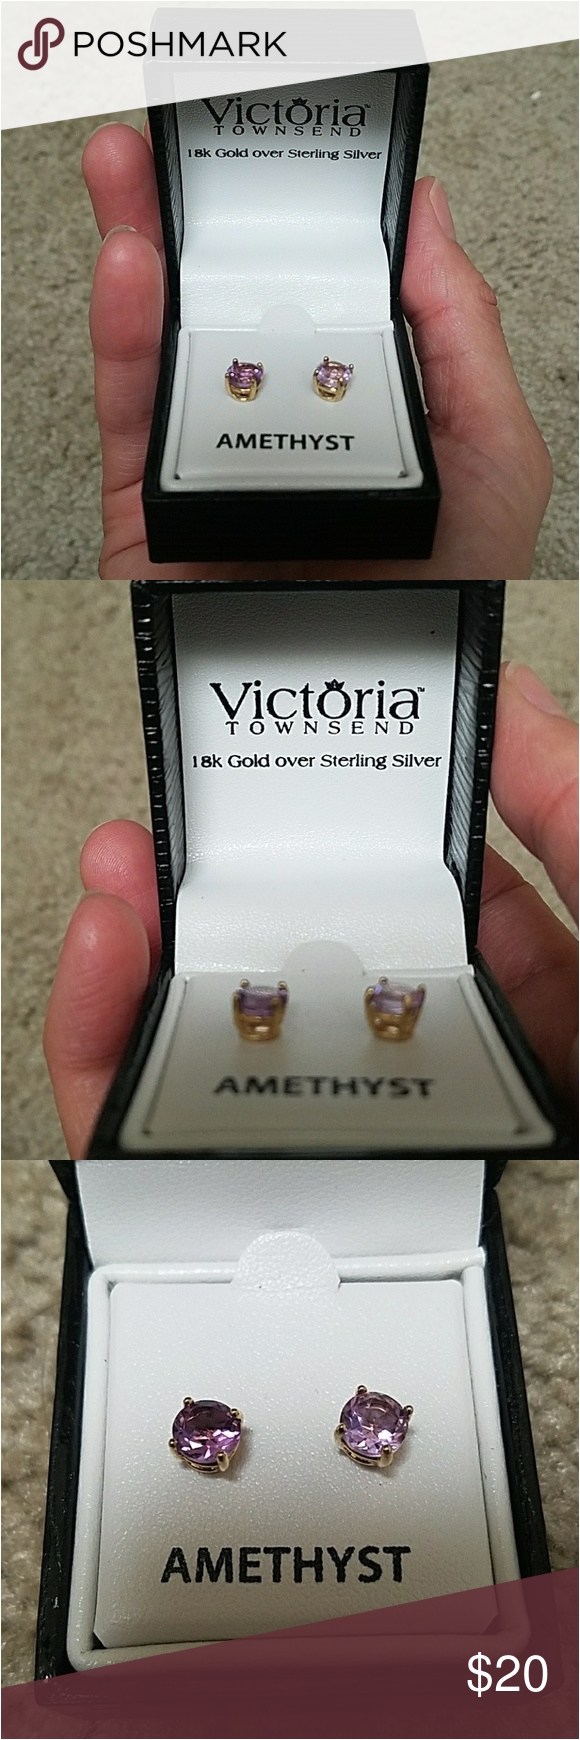 18k gold over sterling silver amethyst earrings